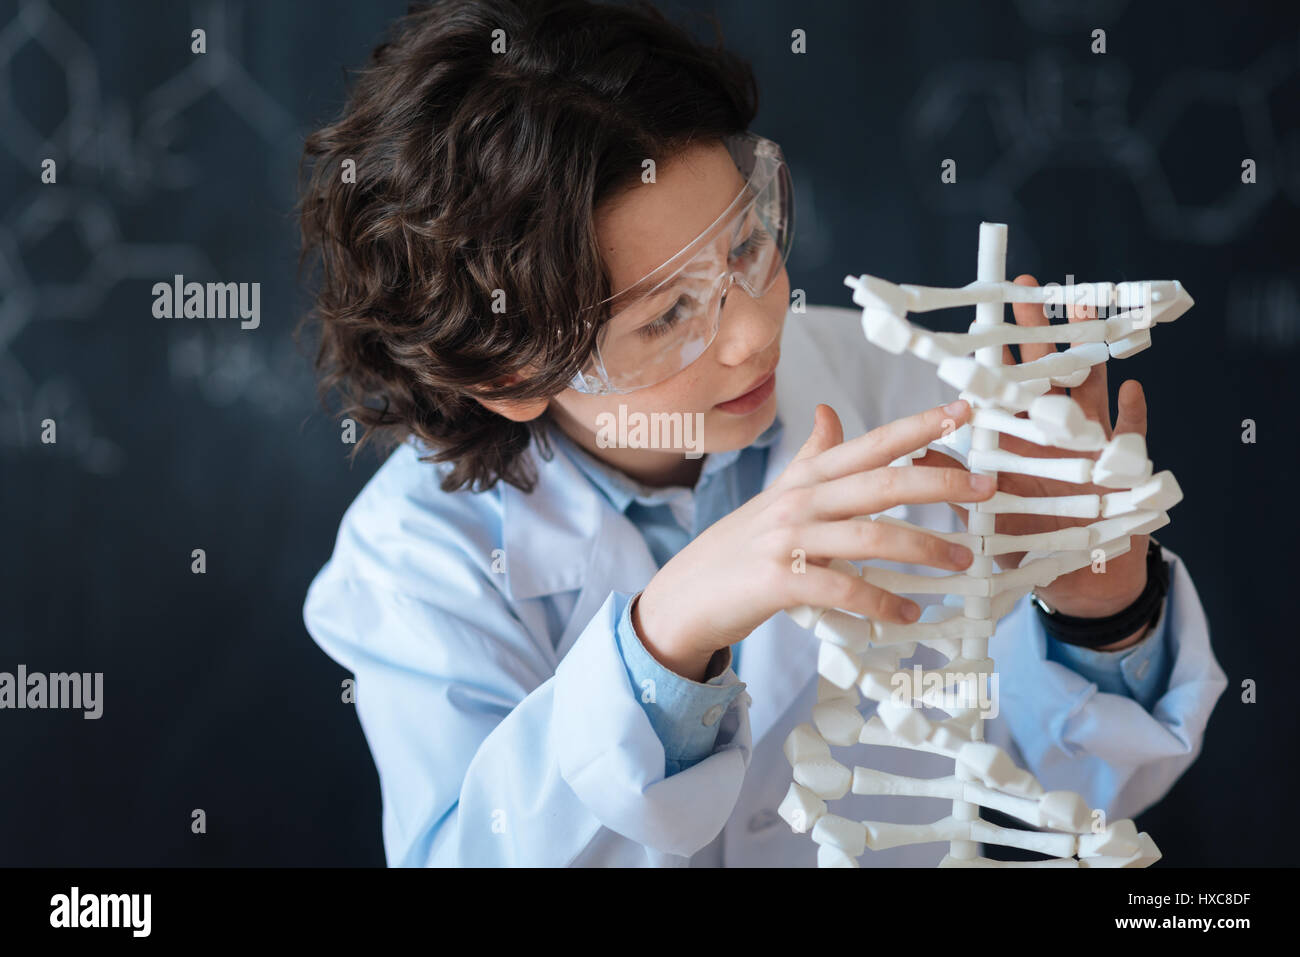 Involved boy enjoying chemistry project at school Stock Photo